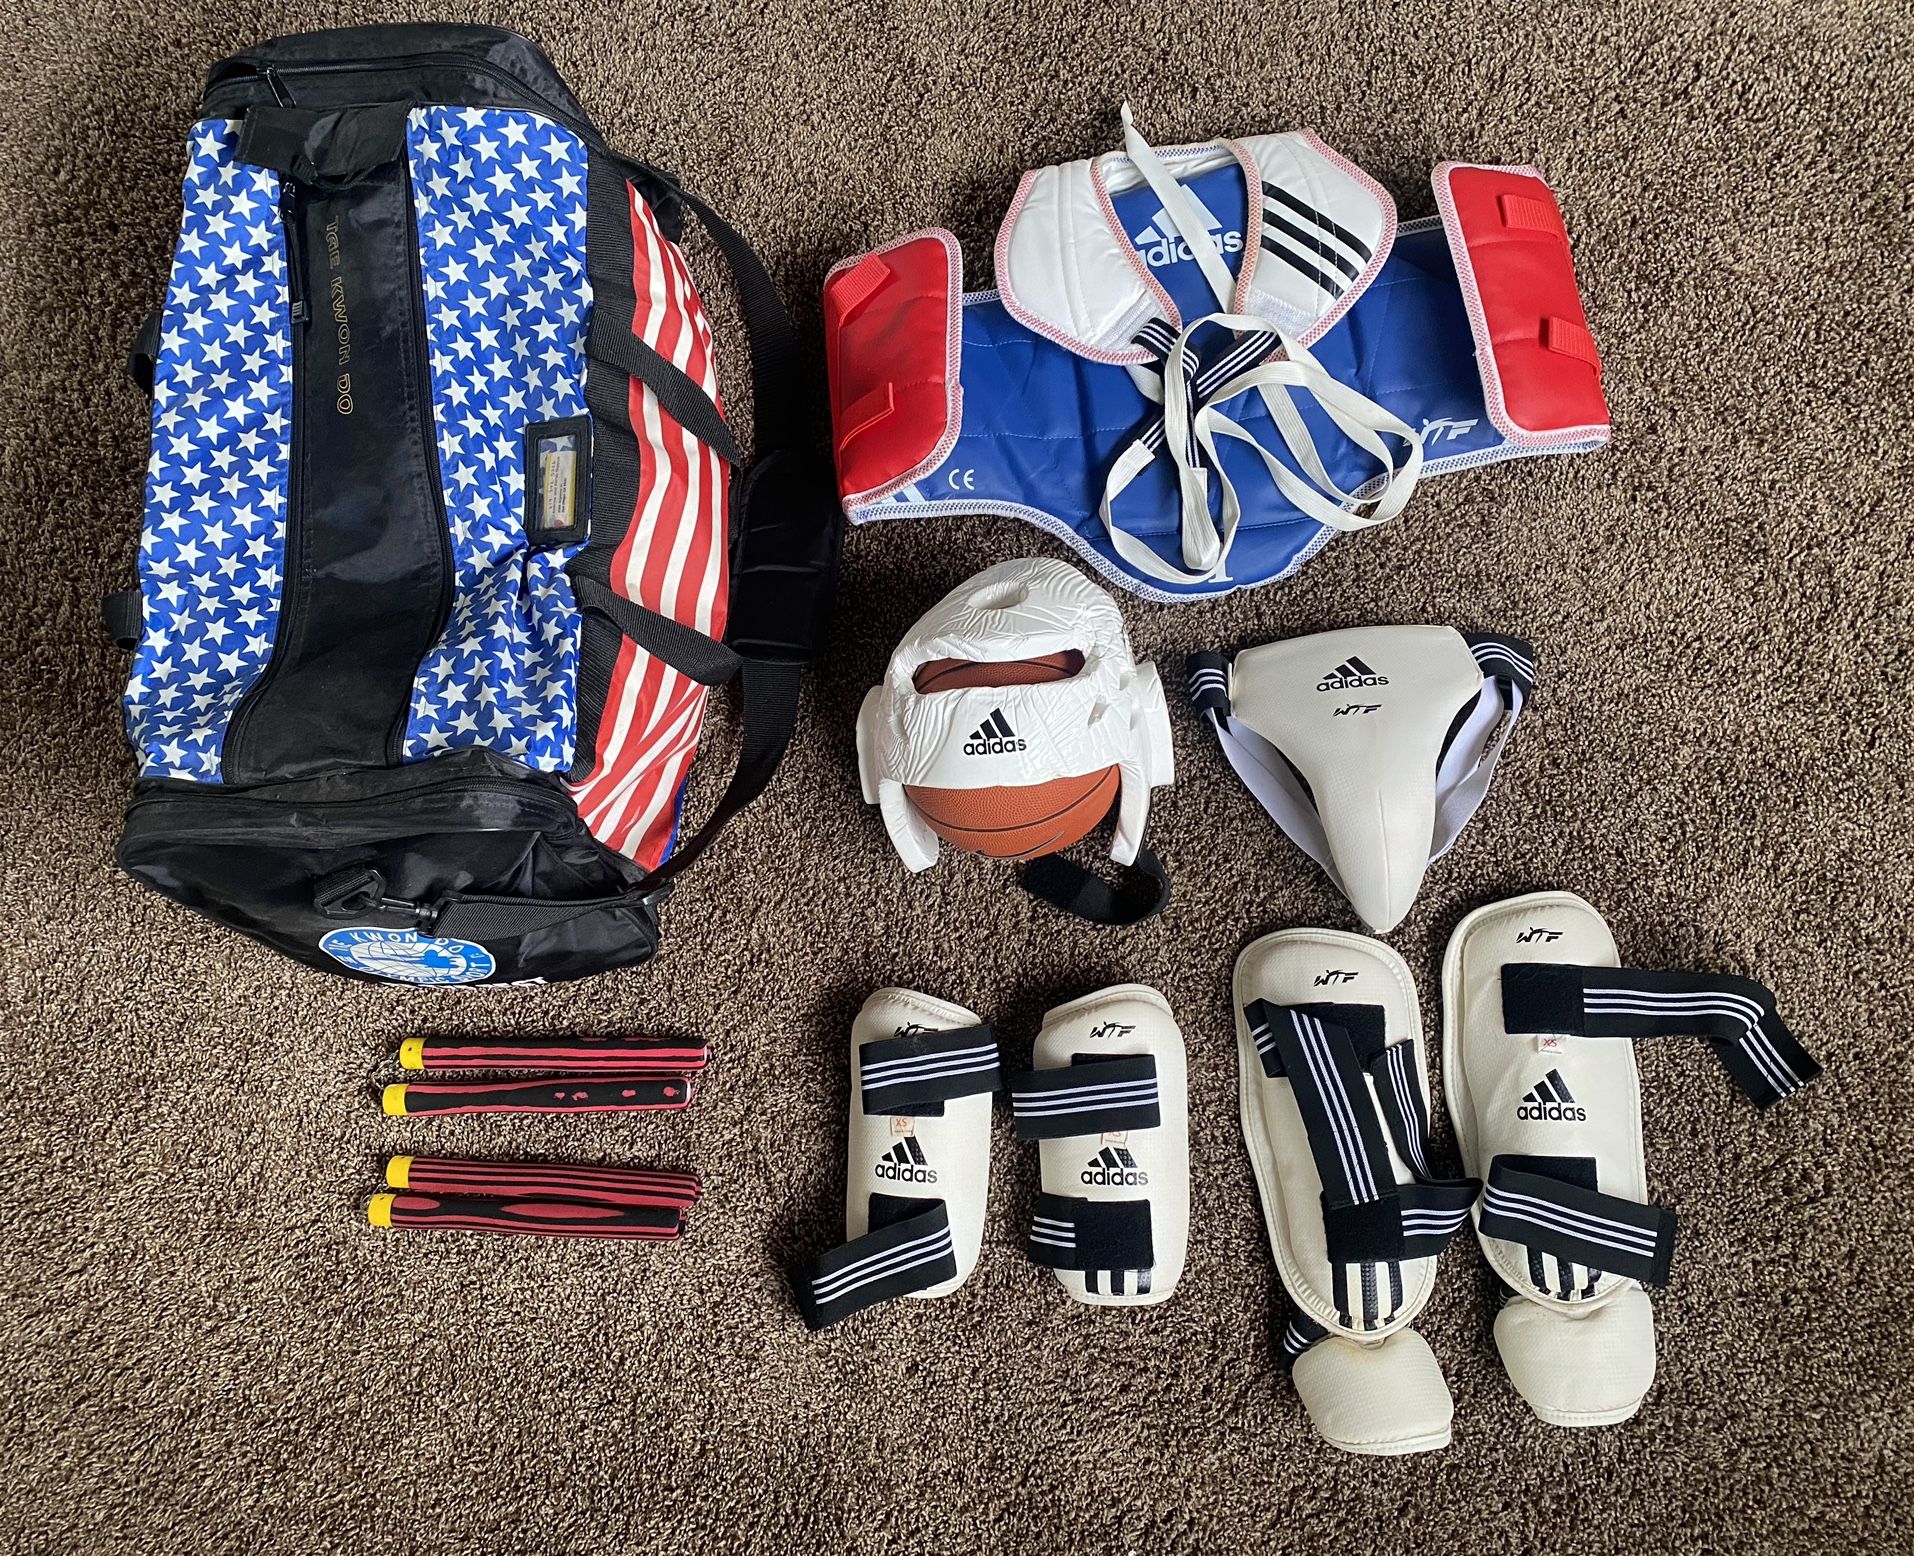 Adidas Taekwondo Custom Ultimate Sparring Gear Set w/Team USA Bag & Numb chucks.